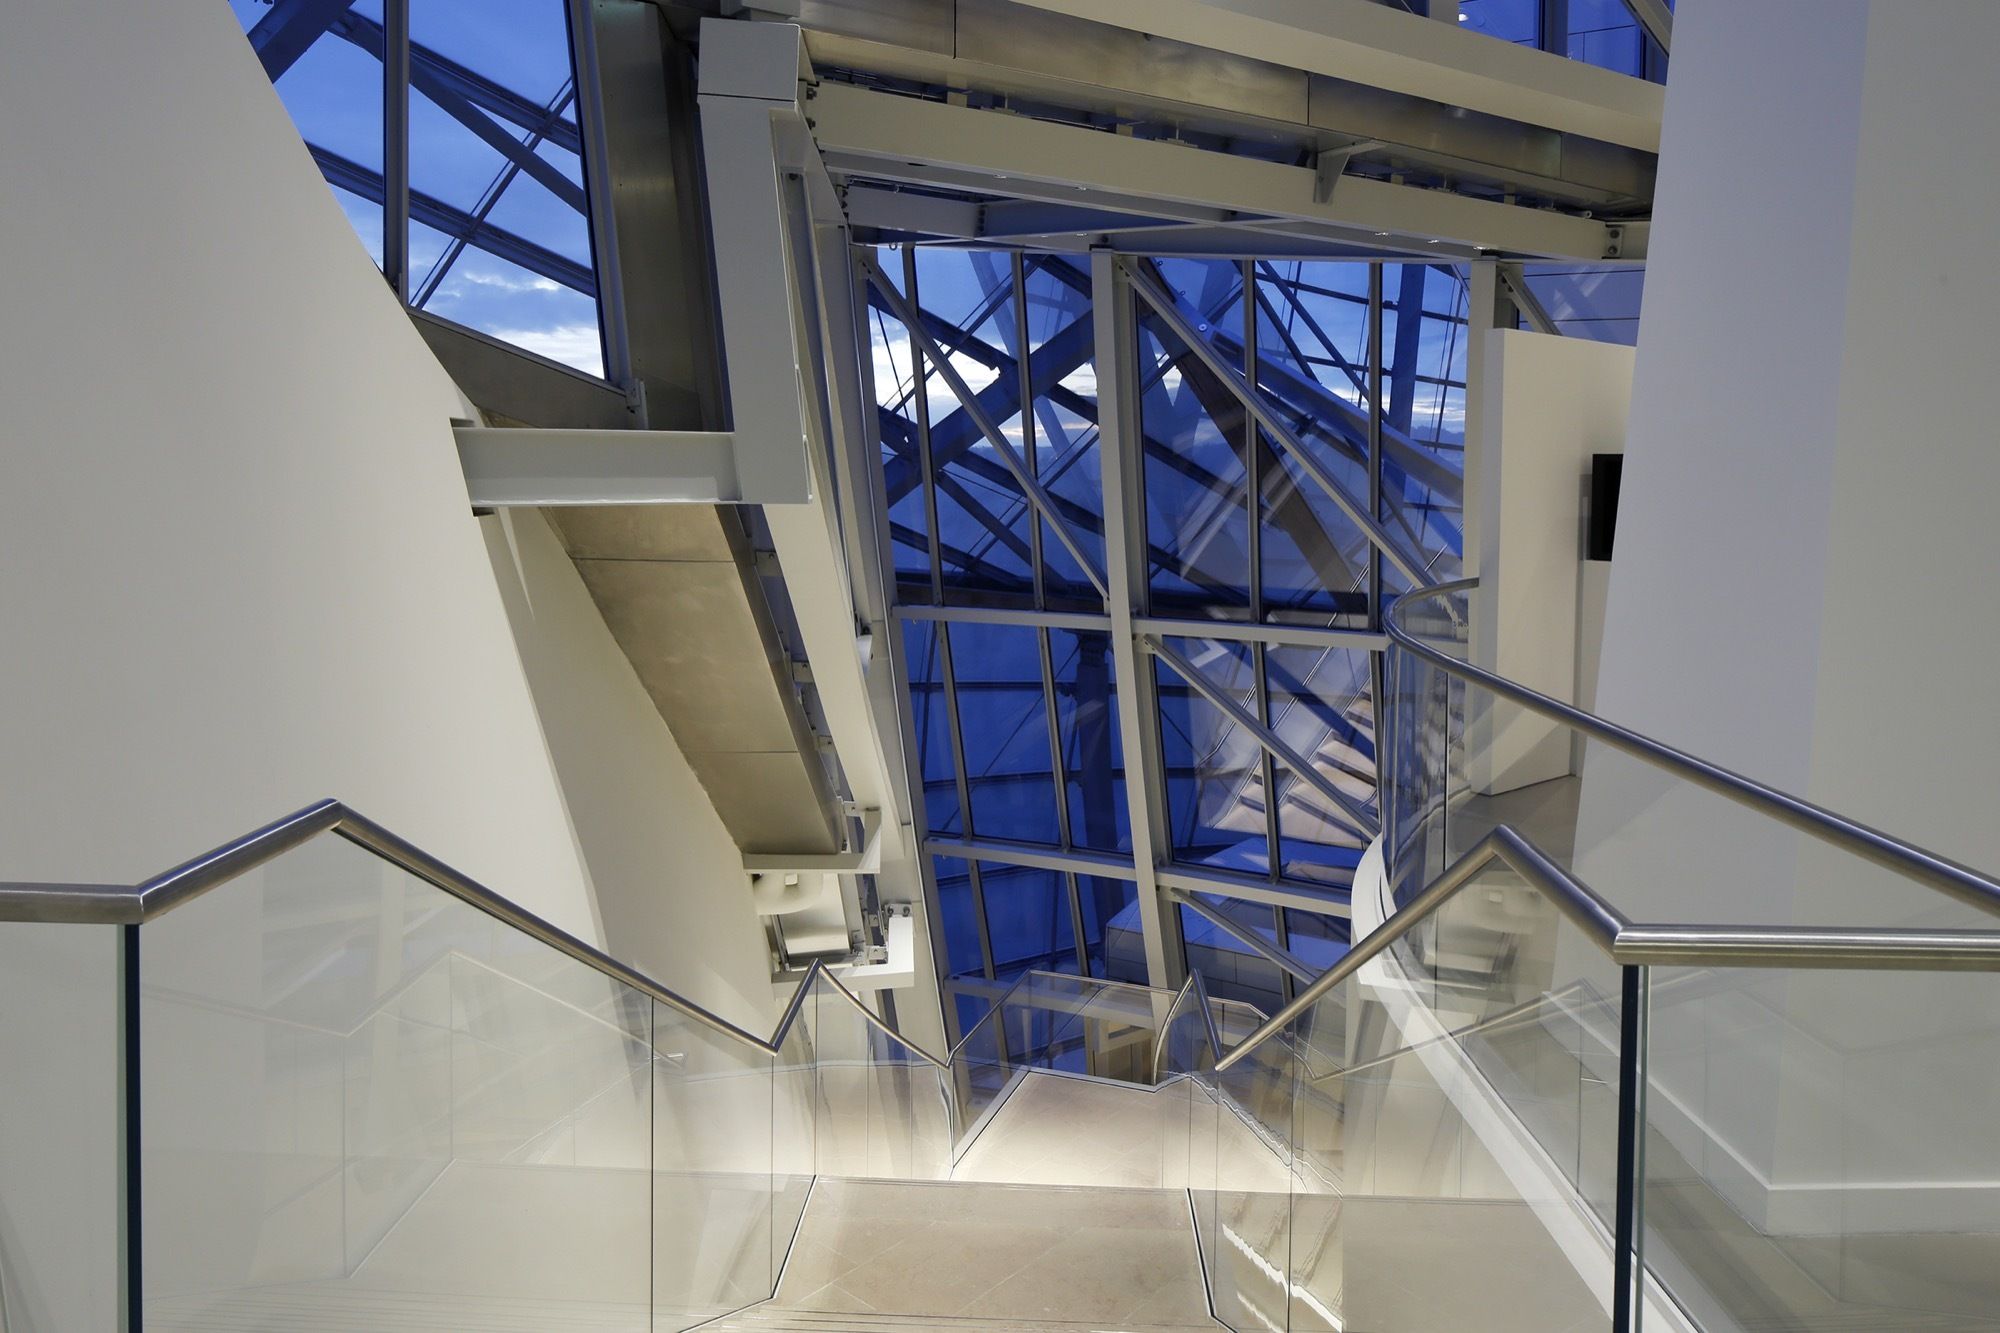 Fondation Louis Vuitton / Gehry Partners